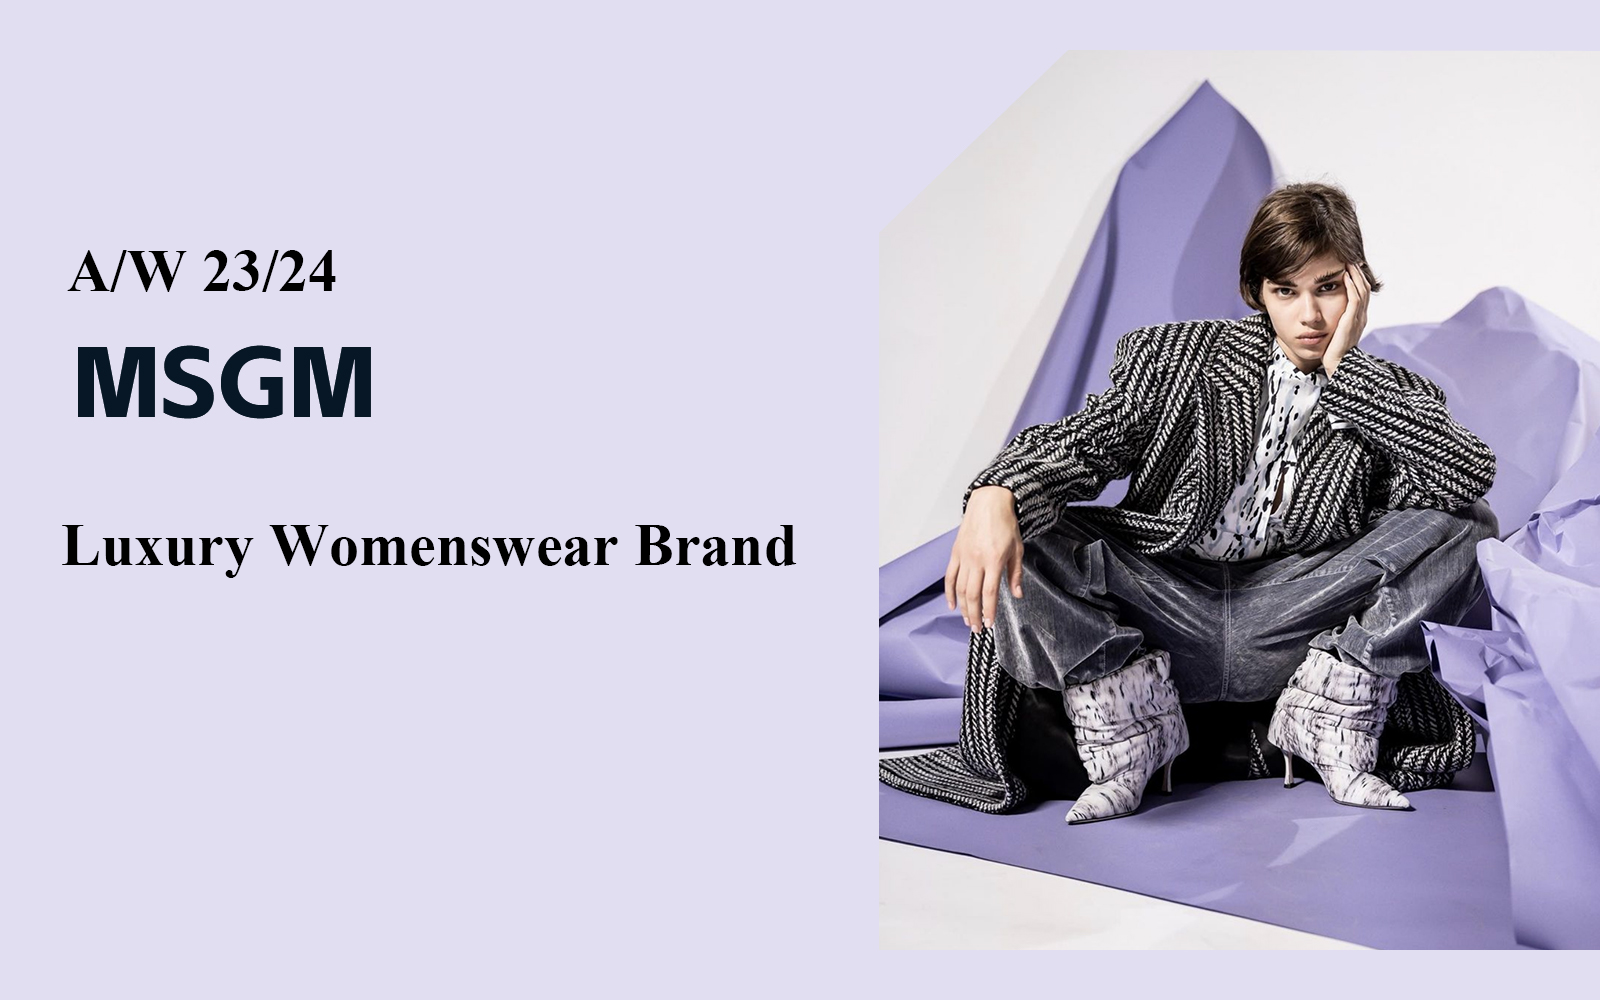 Taste of Modernity -- The Analysis of MSGM The Luxury Womenswear Brand